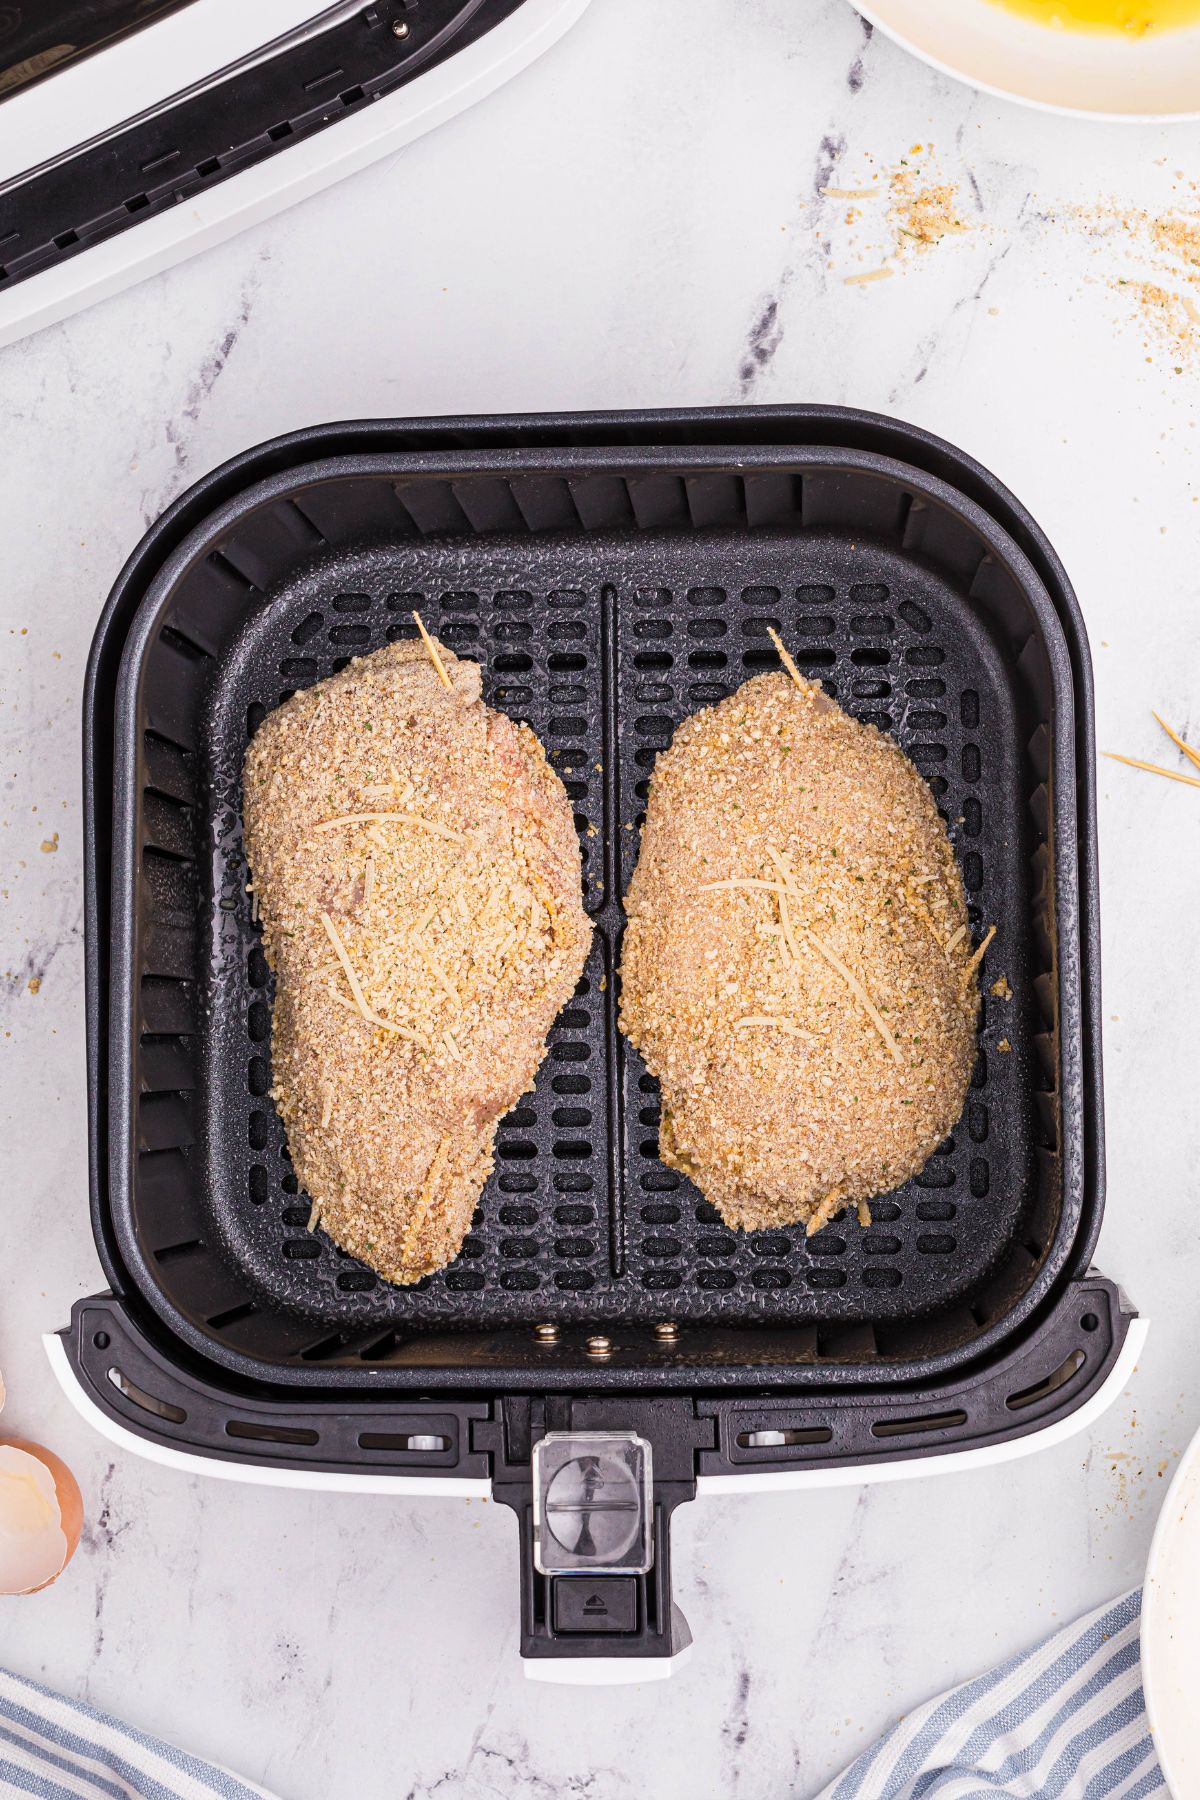 Breaded stuffed chicken breasts in the air fryer basket